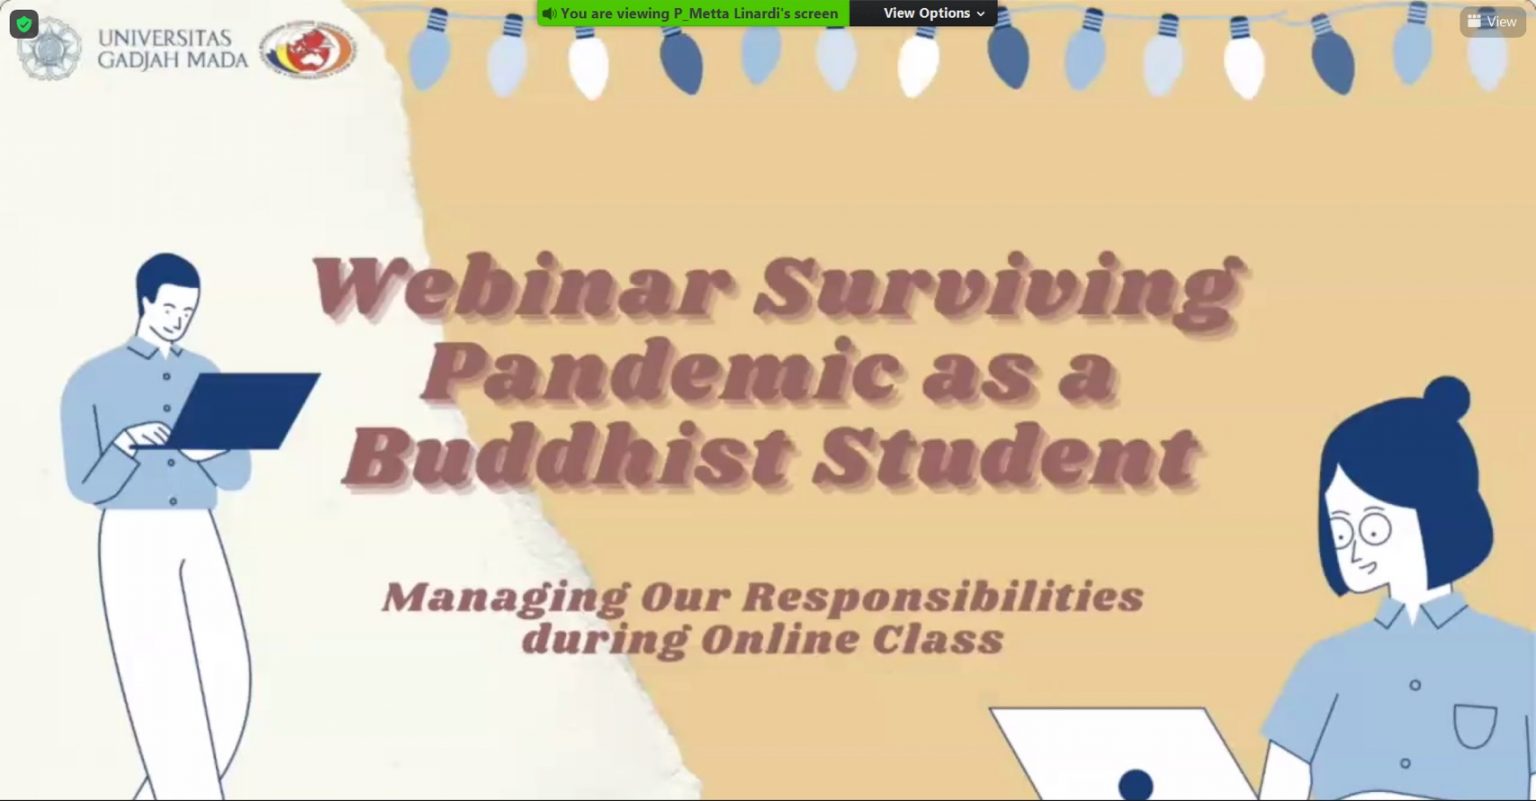 Webinar Surviving Pandemic as a Buddhist Student